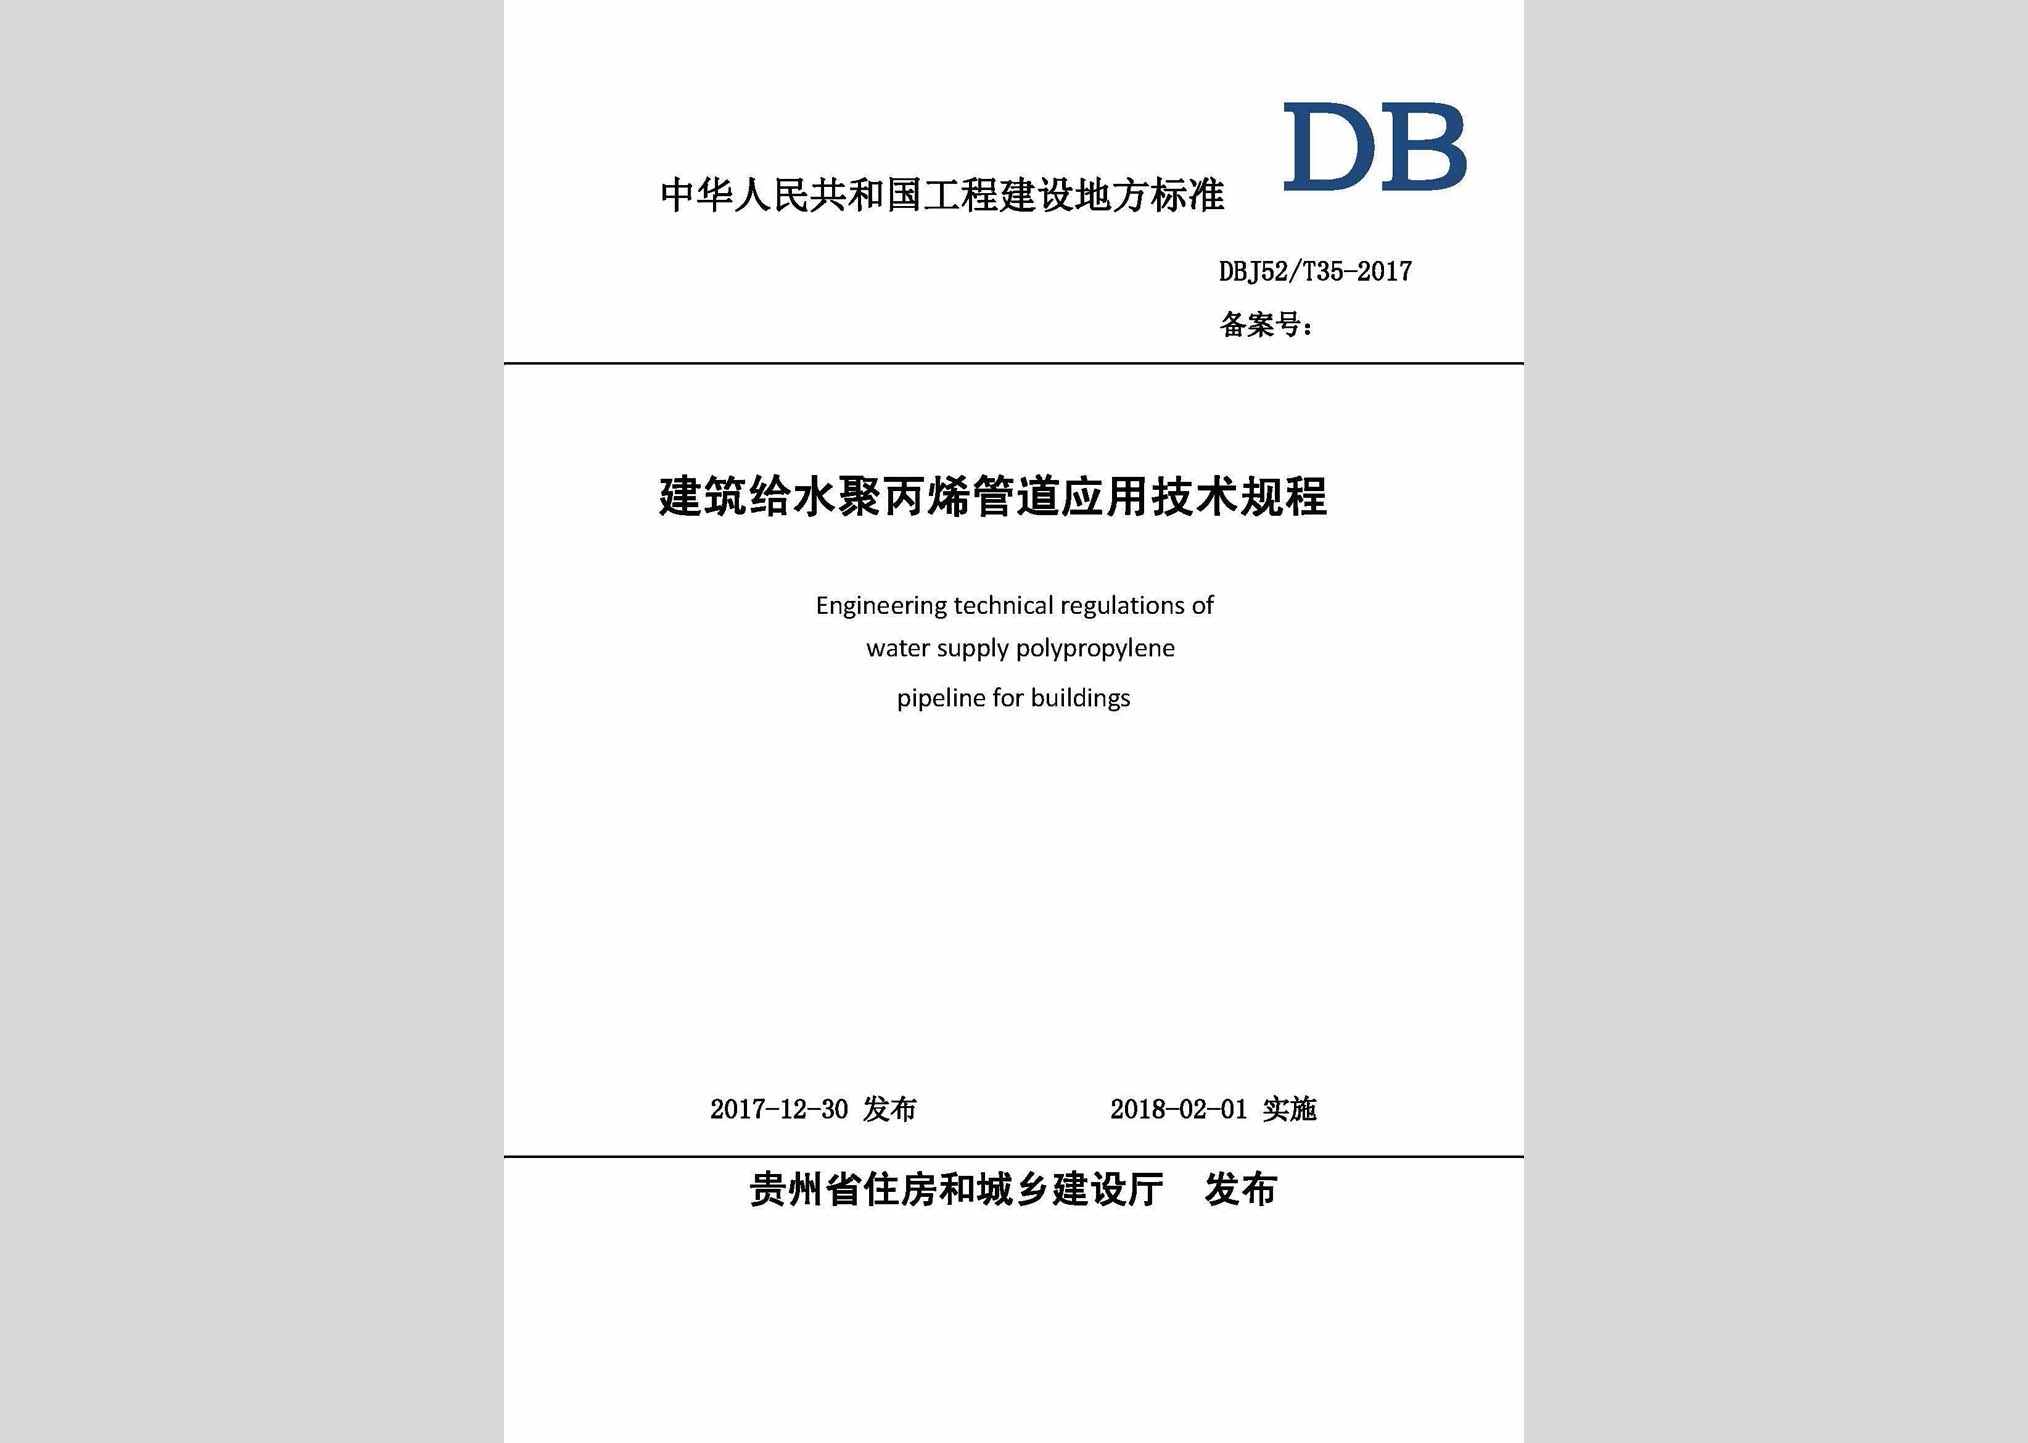 DBJ52/T35-2017：建筑给水聚丙烯管道应用技术规程